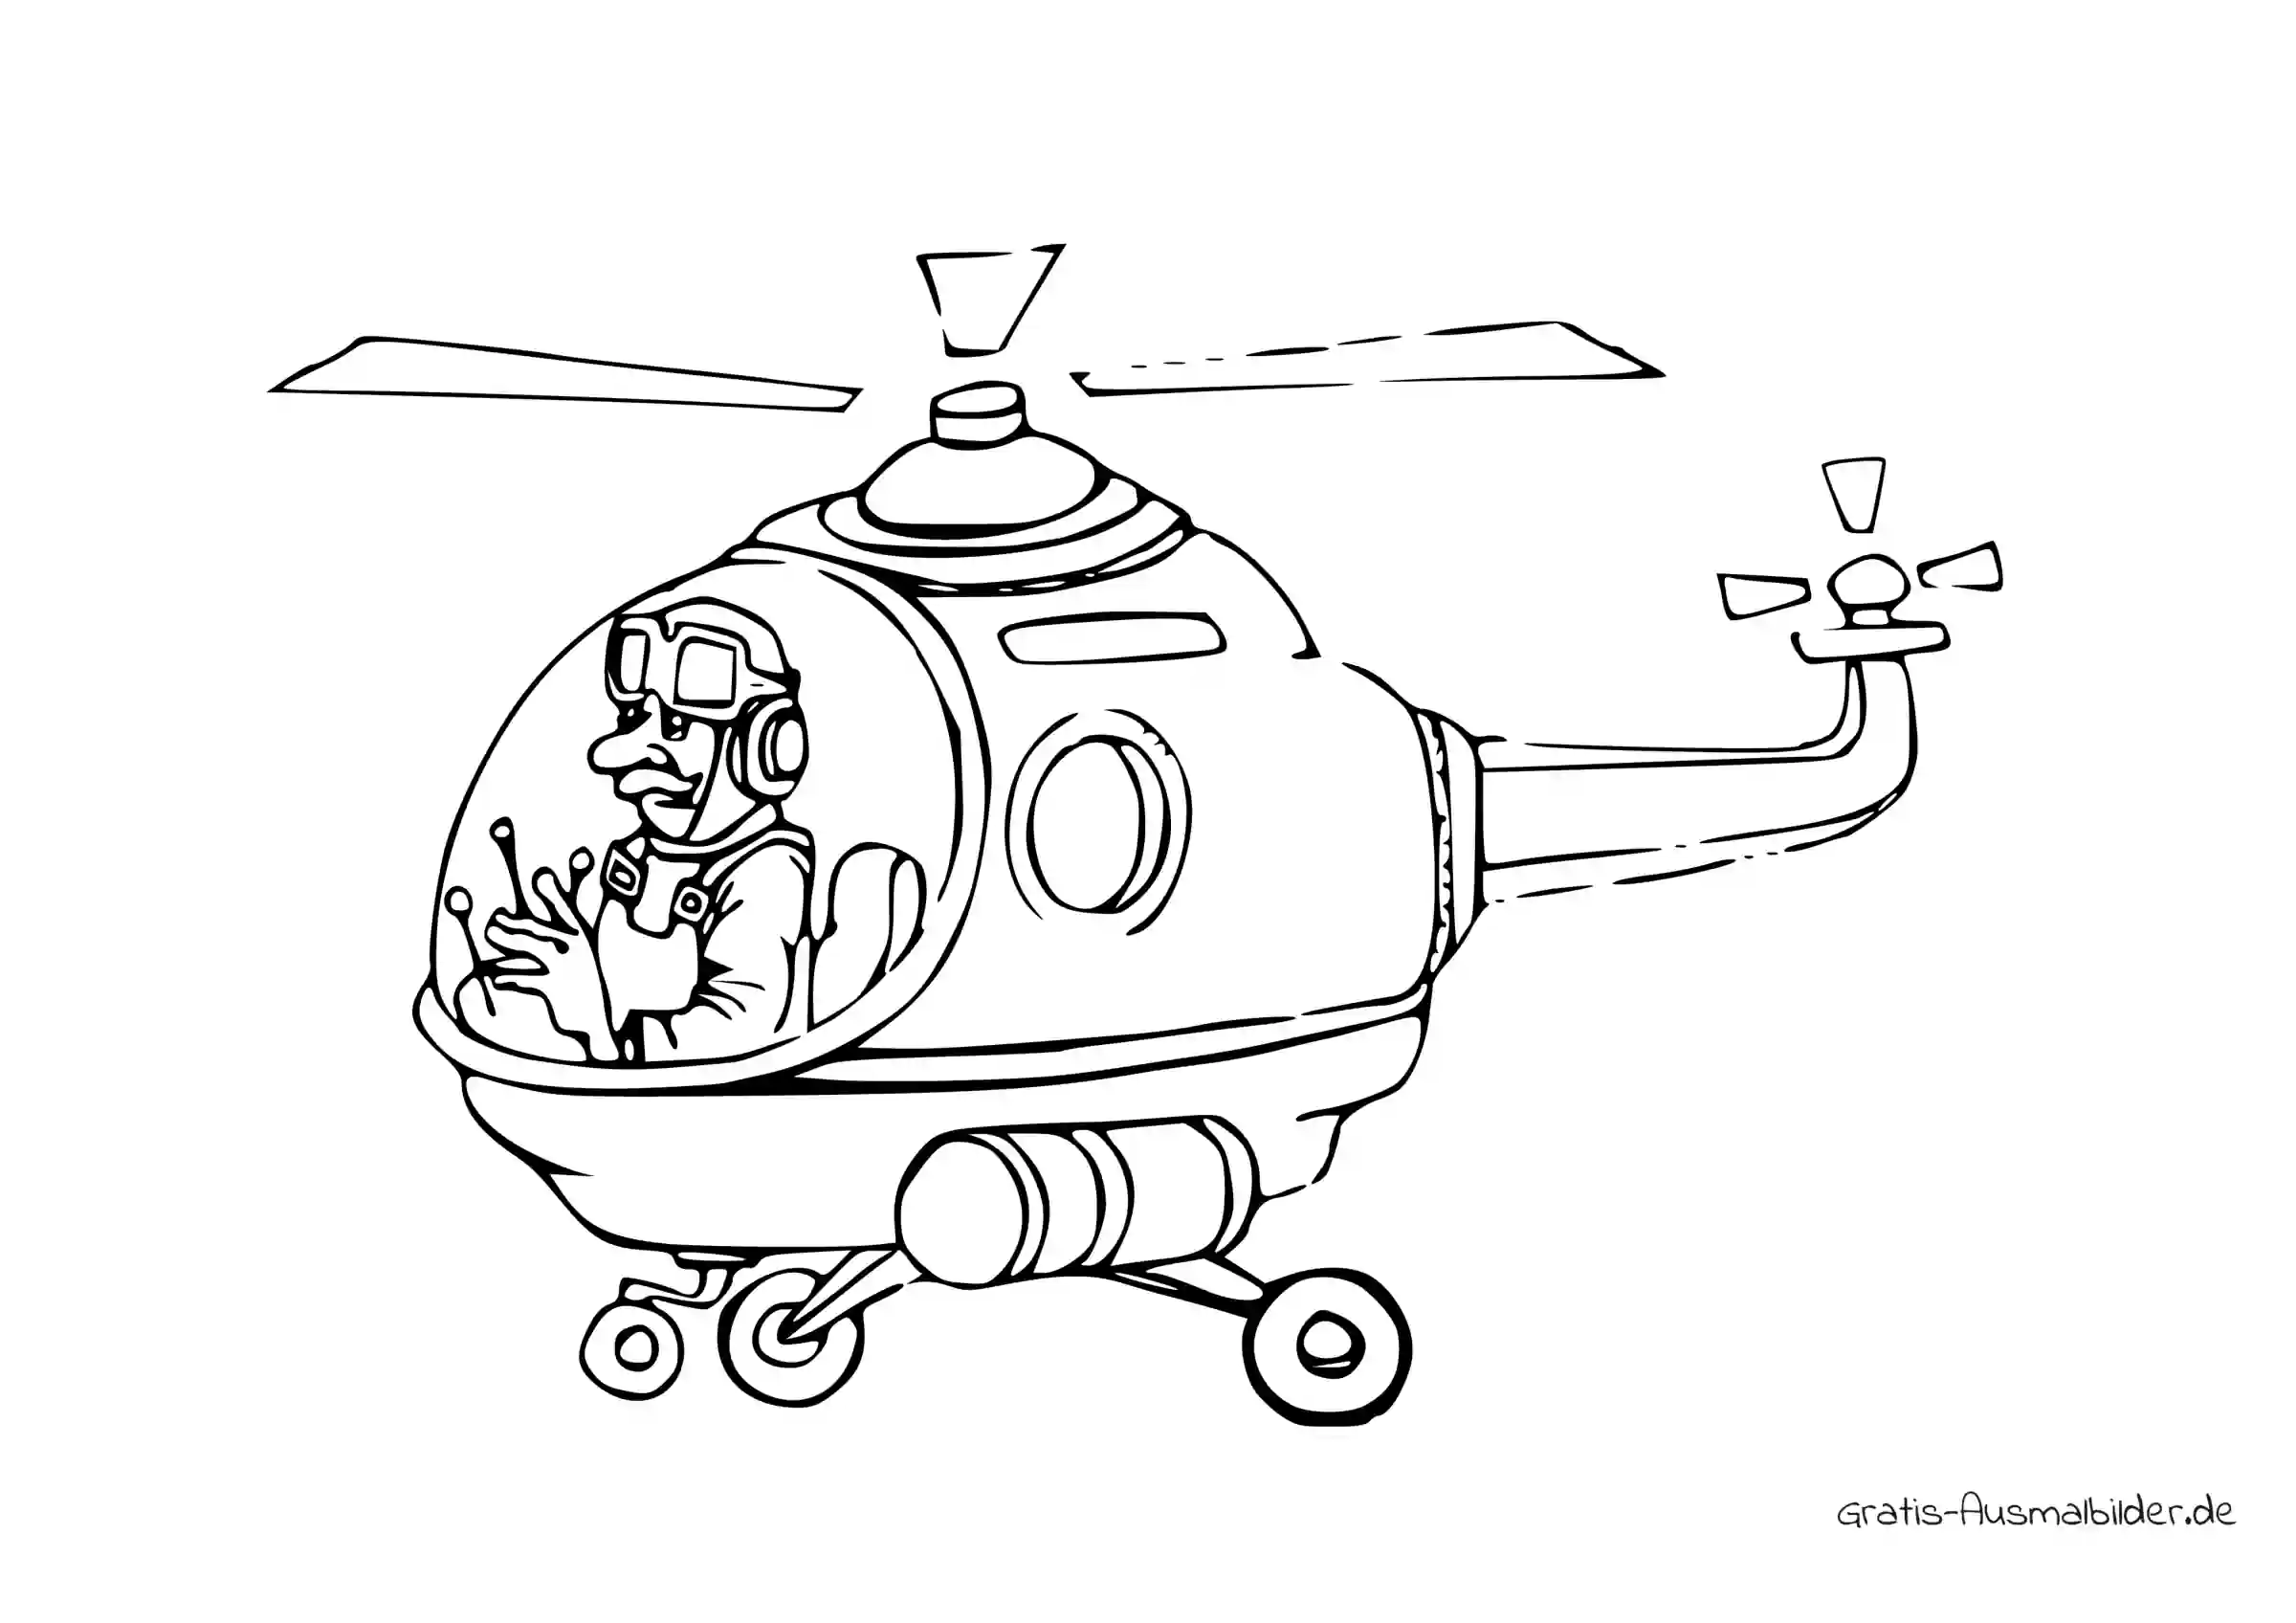 Ausmalbild Pilot in einem Helikopter